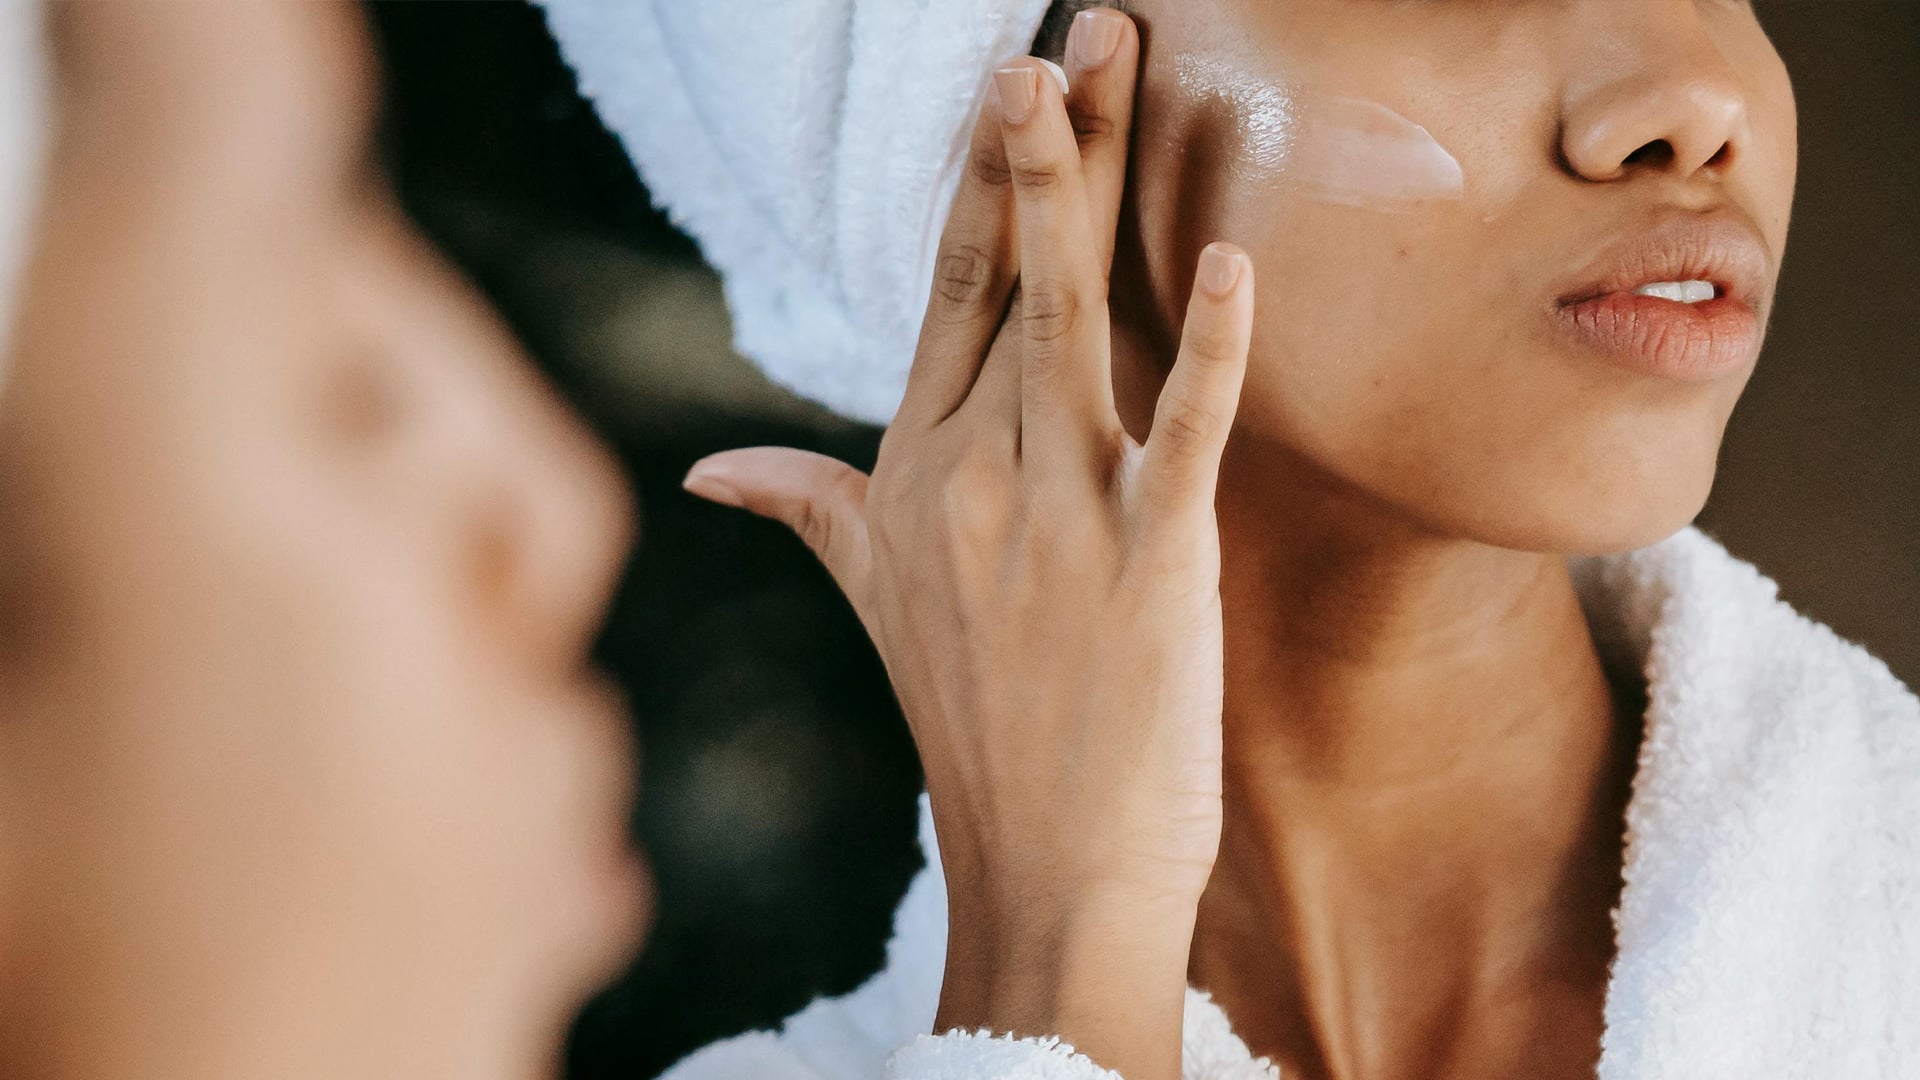 Shallow focus of woman in bathrobe applying moisturizer on her cheek